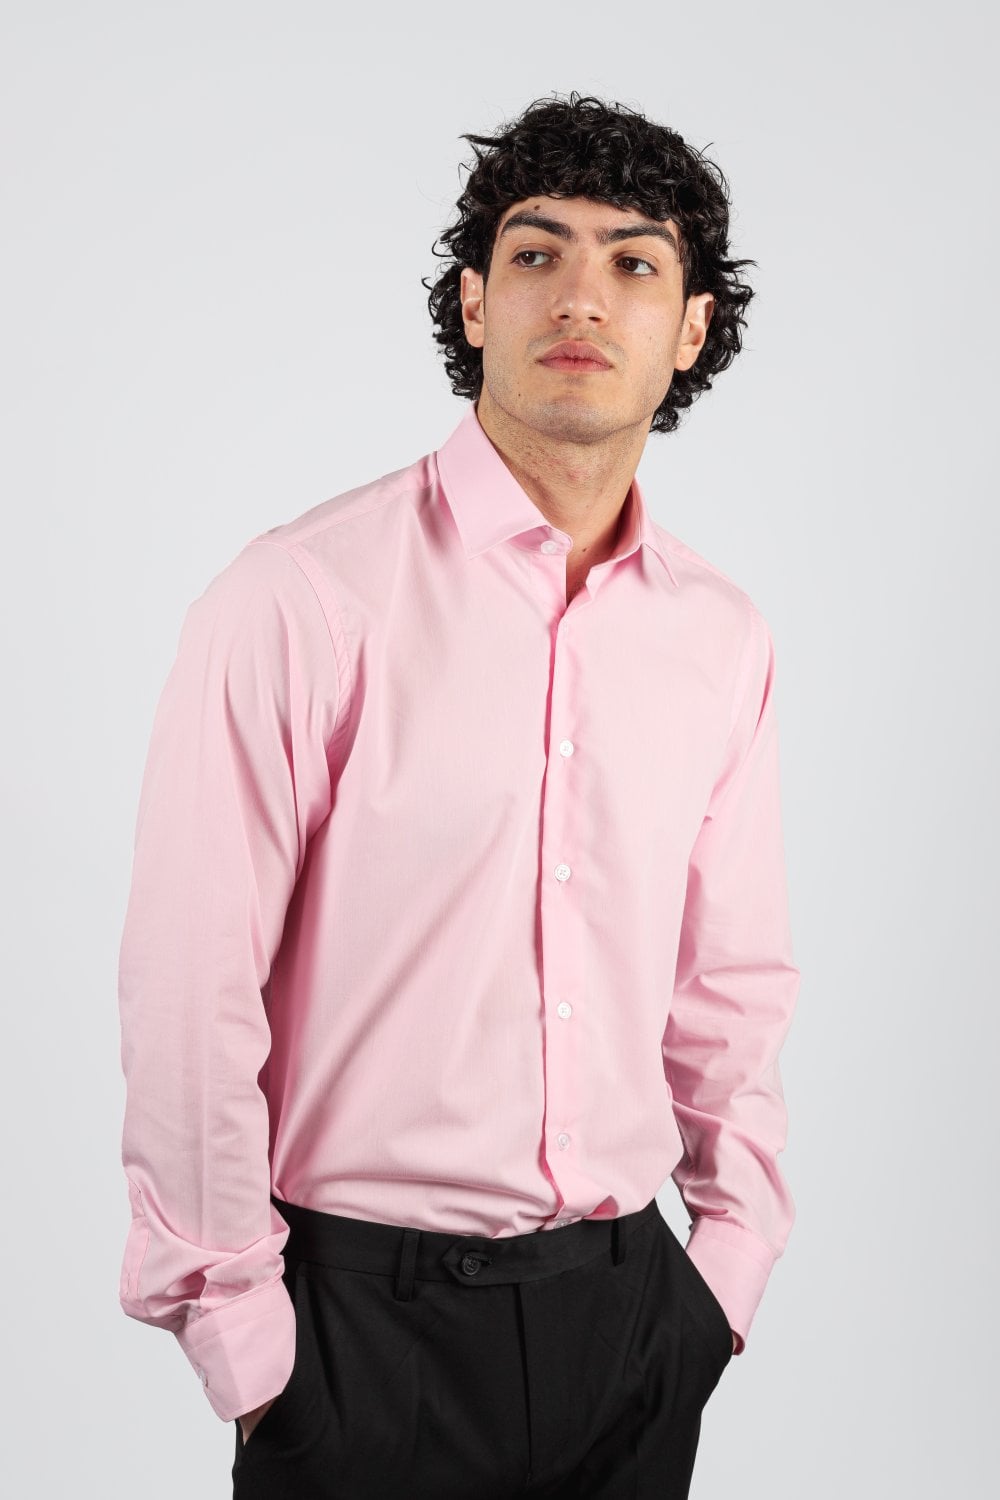 Smart Casual Long Sleeve Shirt, Shirt Casual Smart Cotton